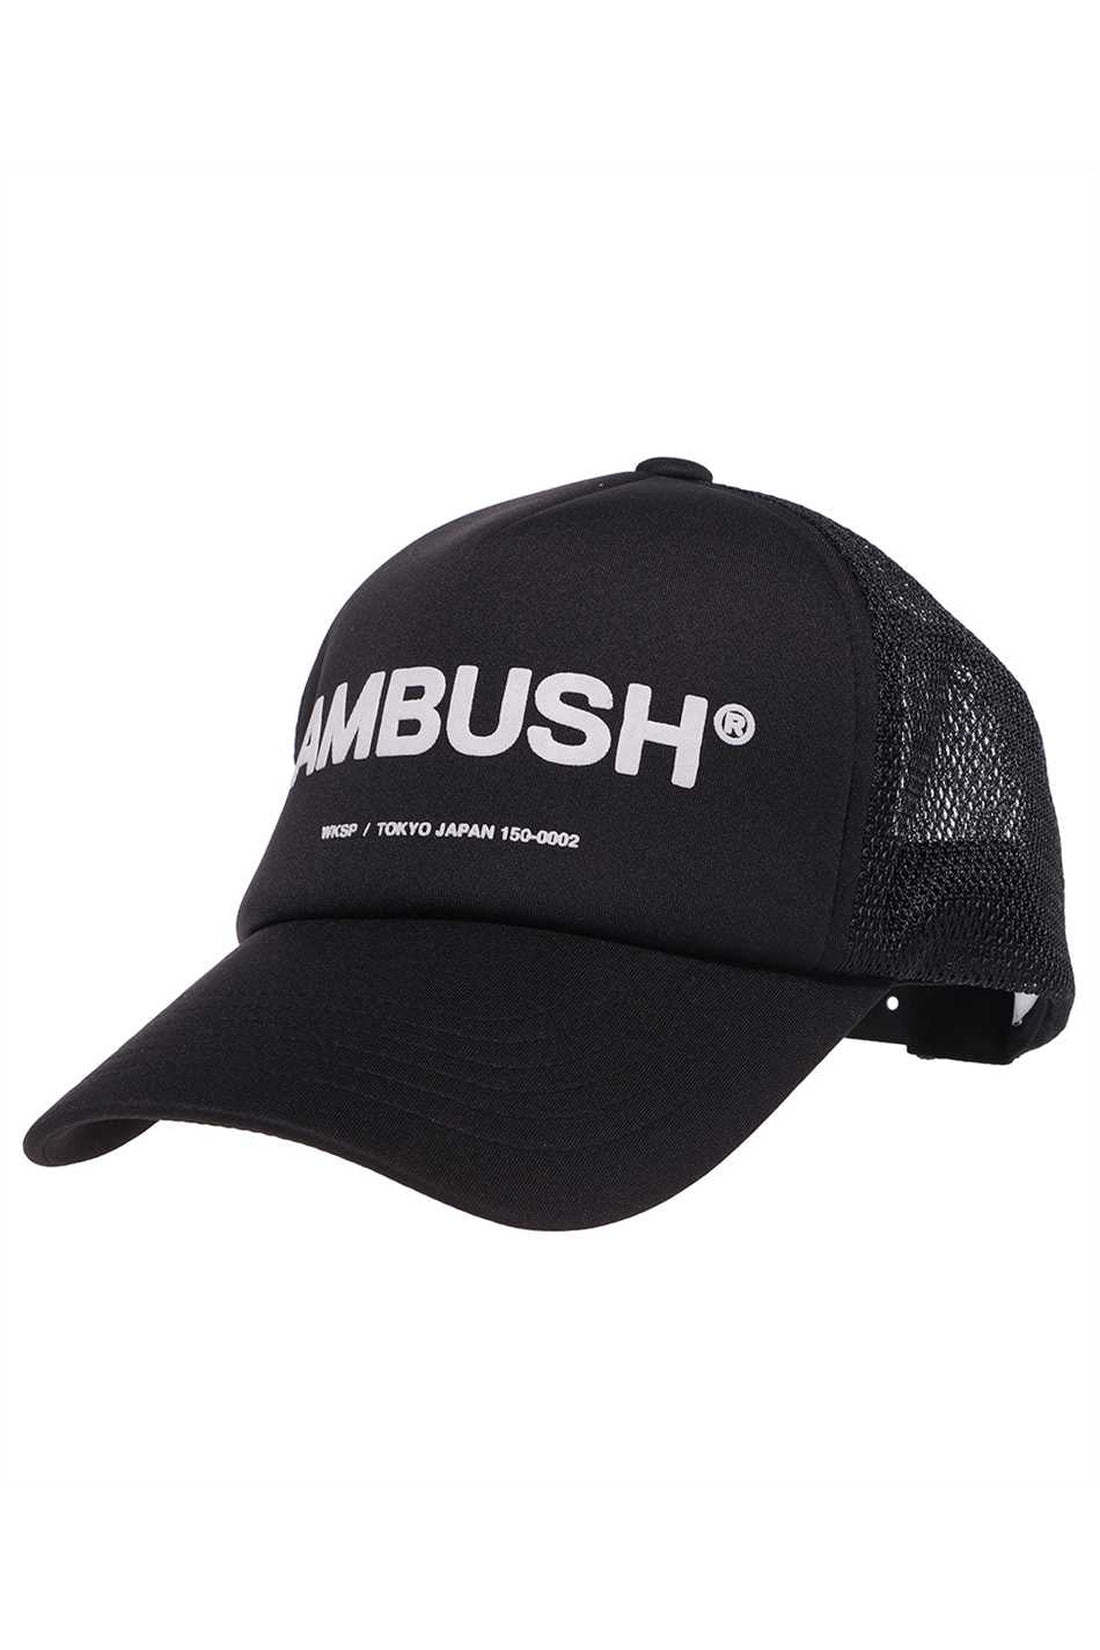 AMBUSH-OUTLET-SALE-Logo baseball cap-ARCHIVIST